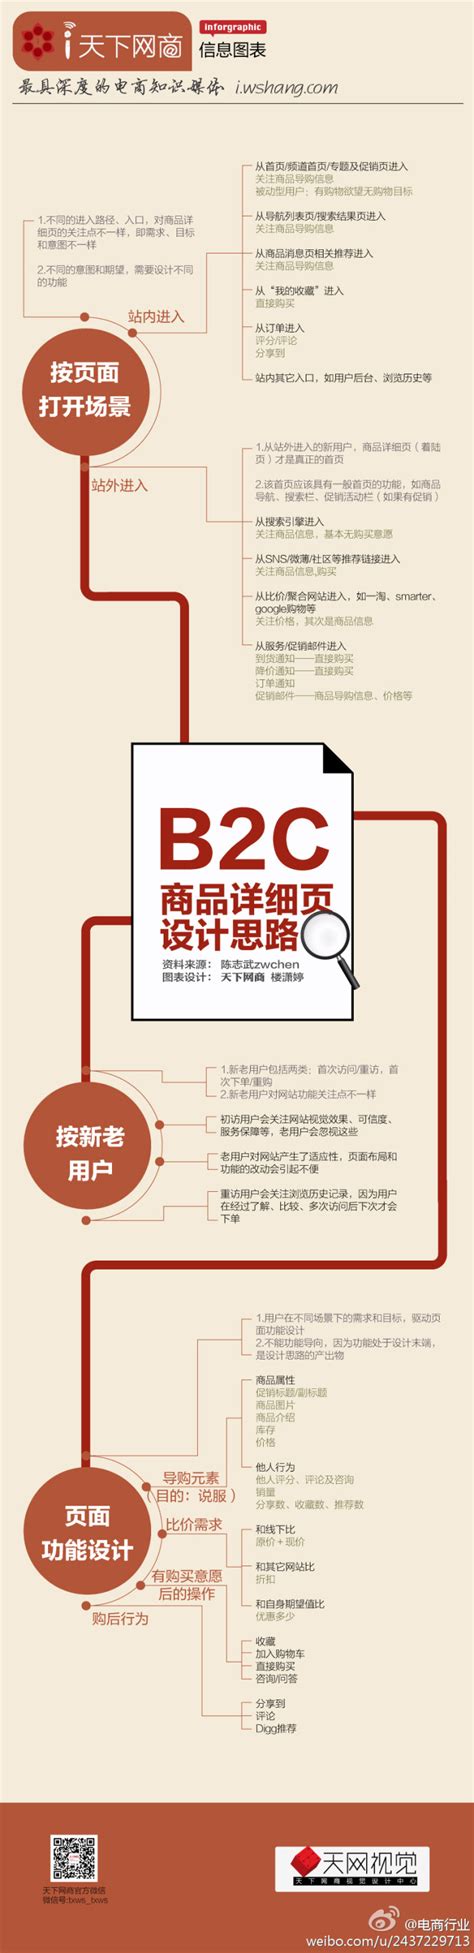 【B2C信息图】B2C商品详细页设计思路 - SEO&SEM